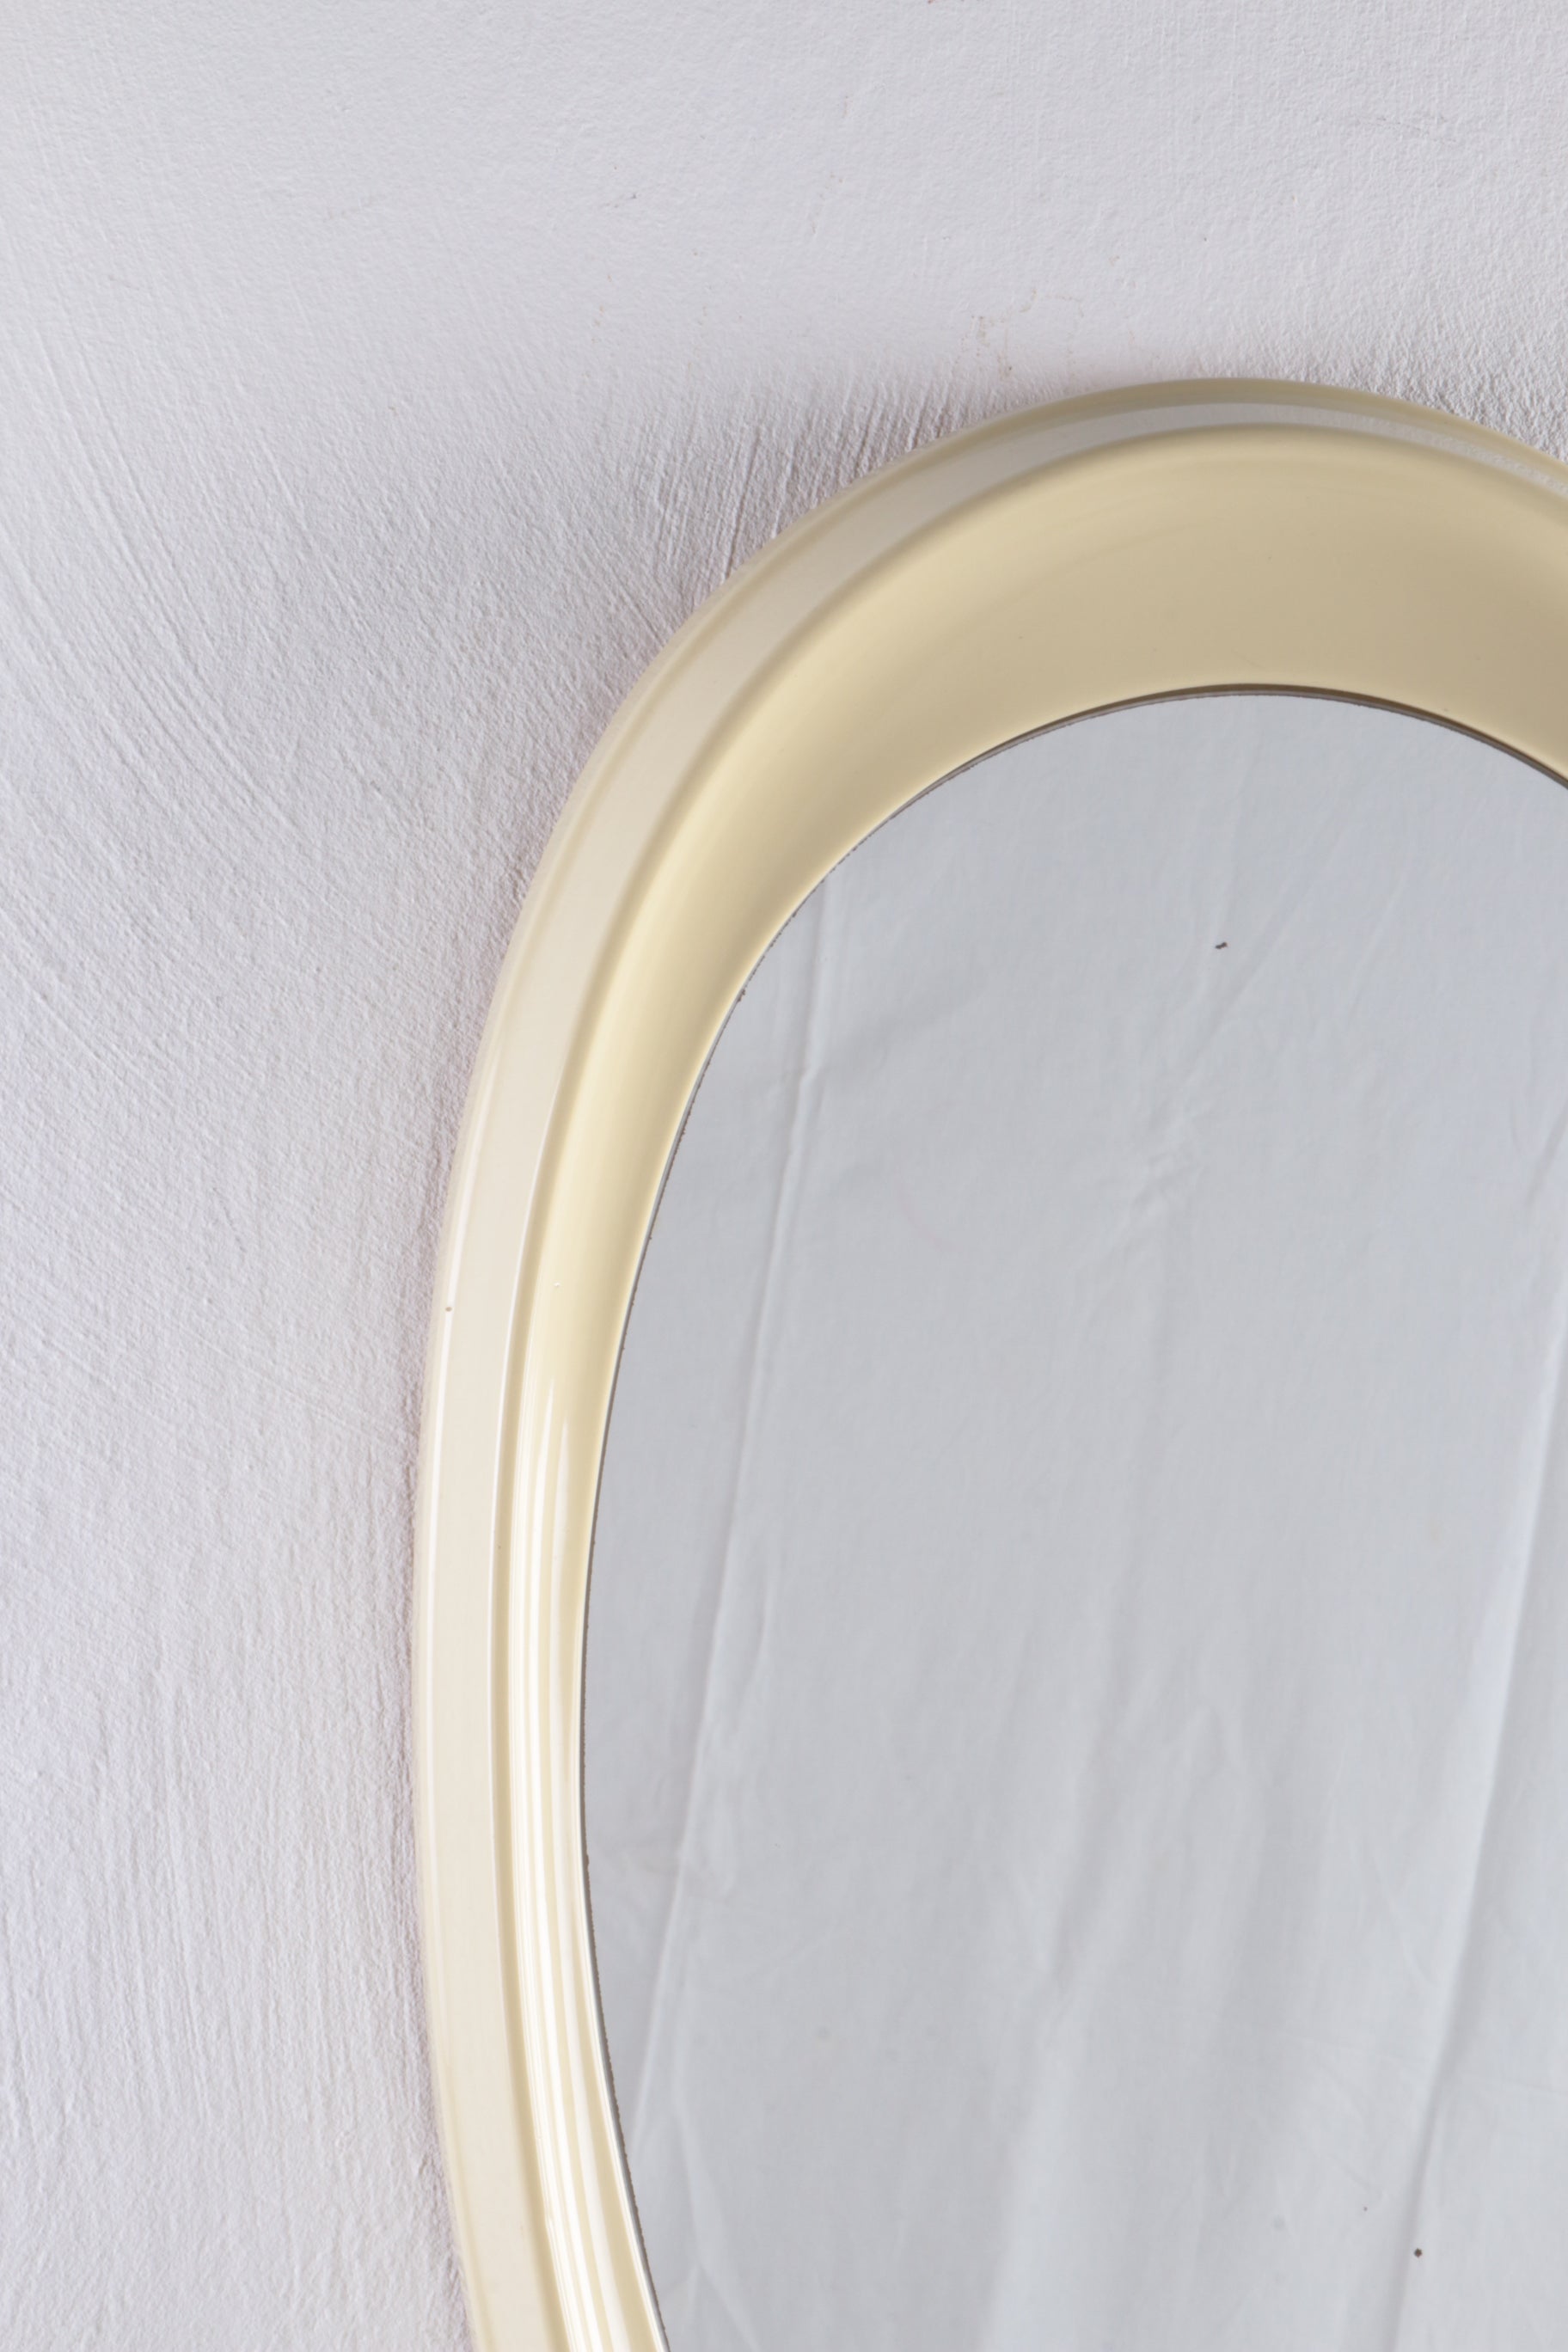 Grote witte ovale Wandspiegel Cattaneo rand